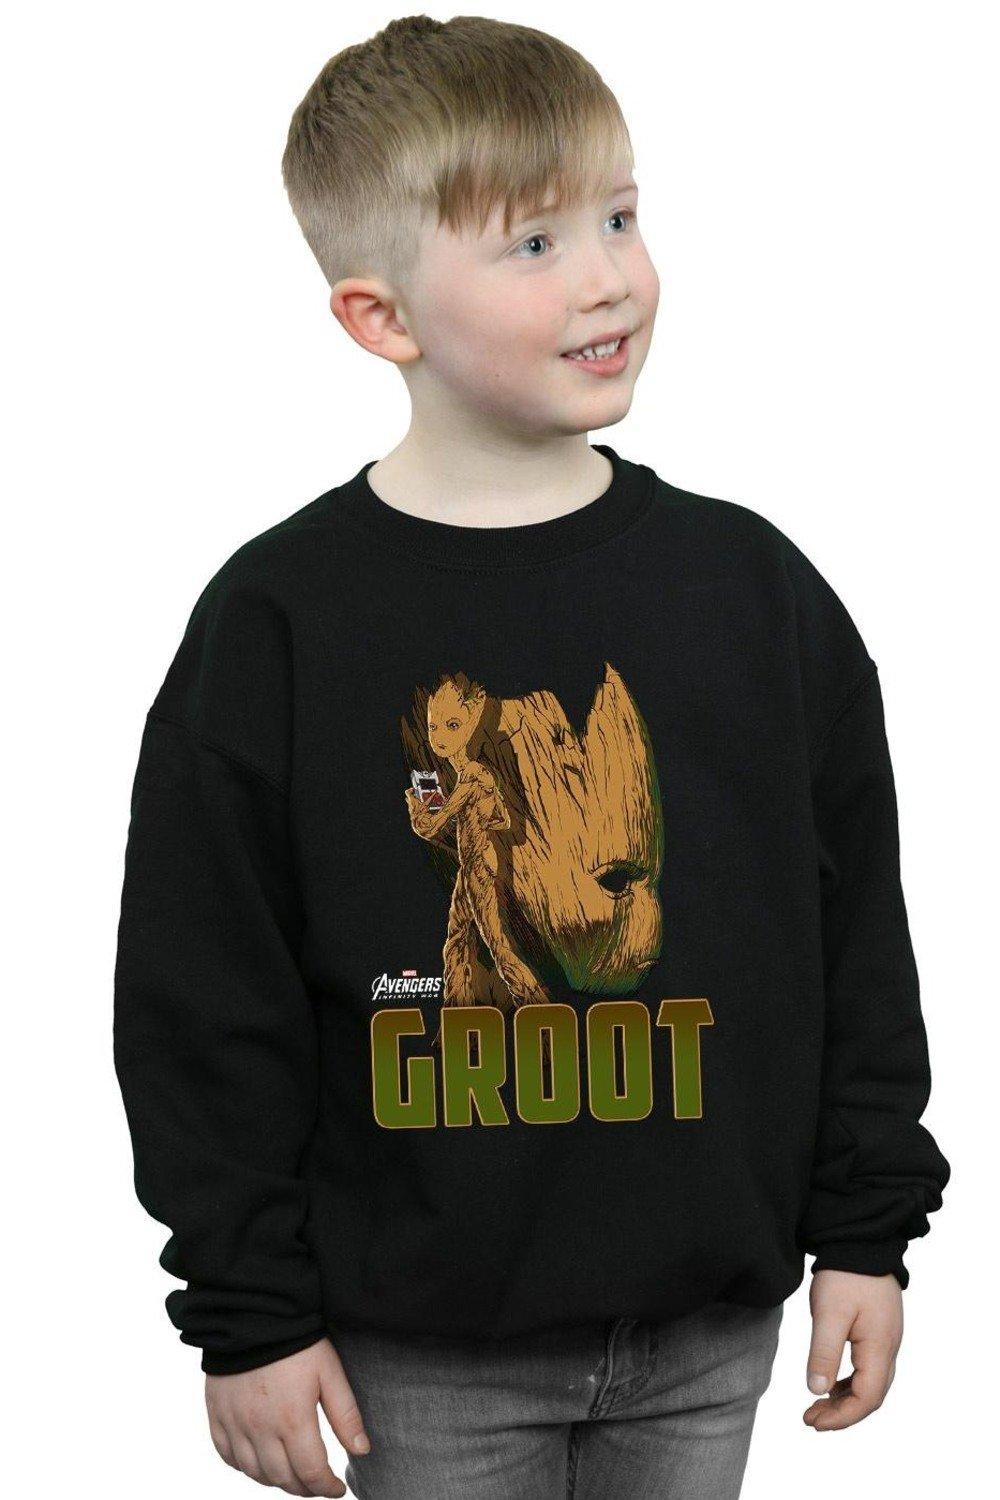 Avengers Infinity War Groot Character Sweatshirt